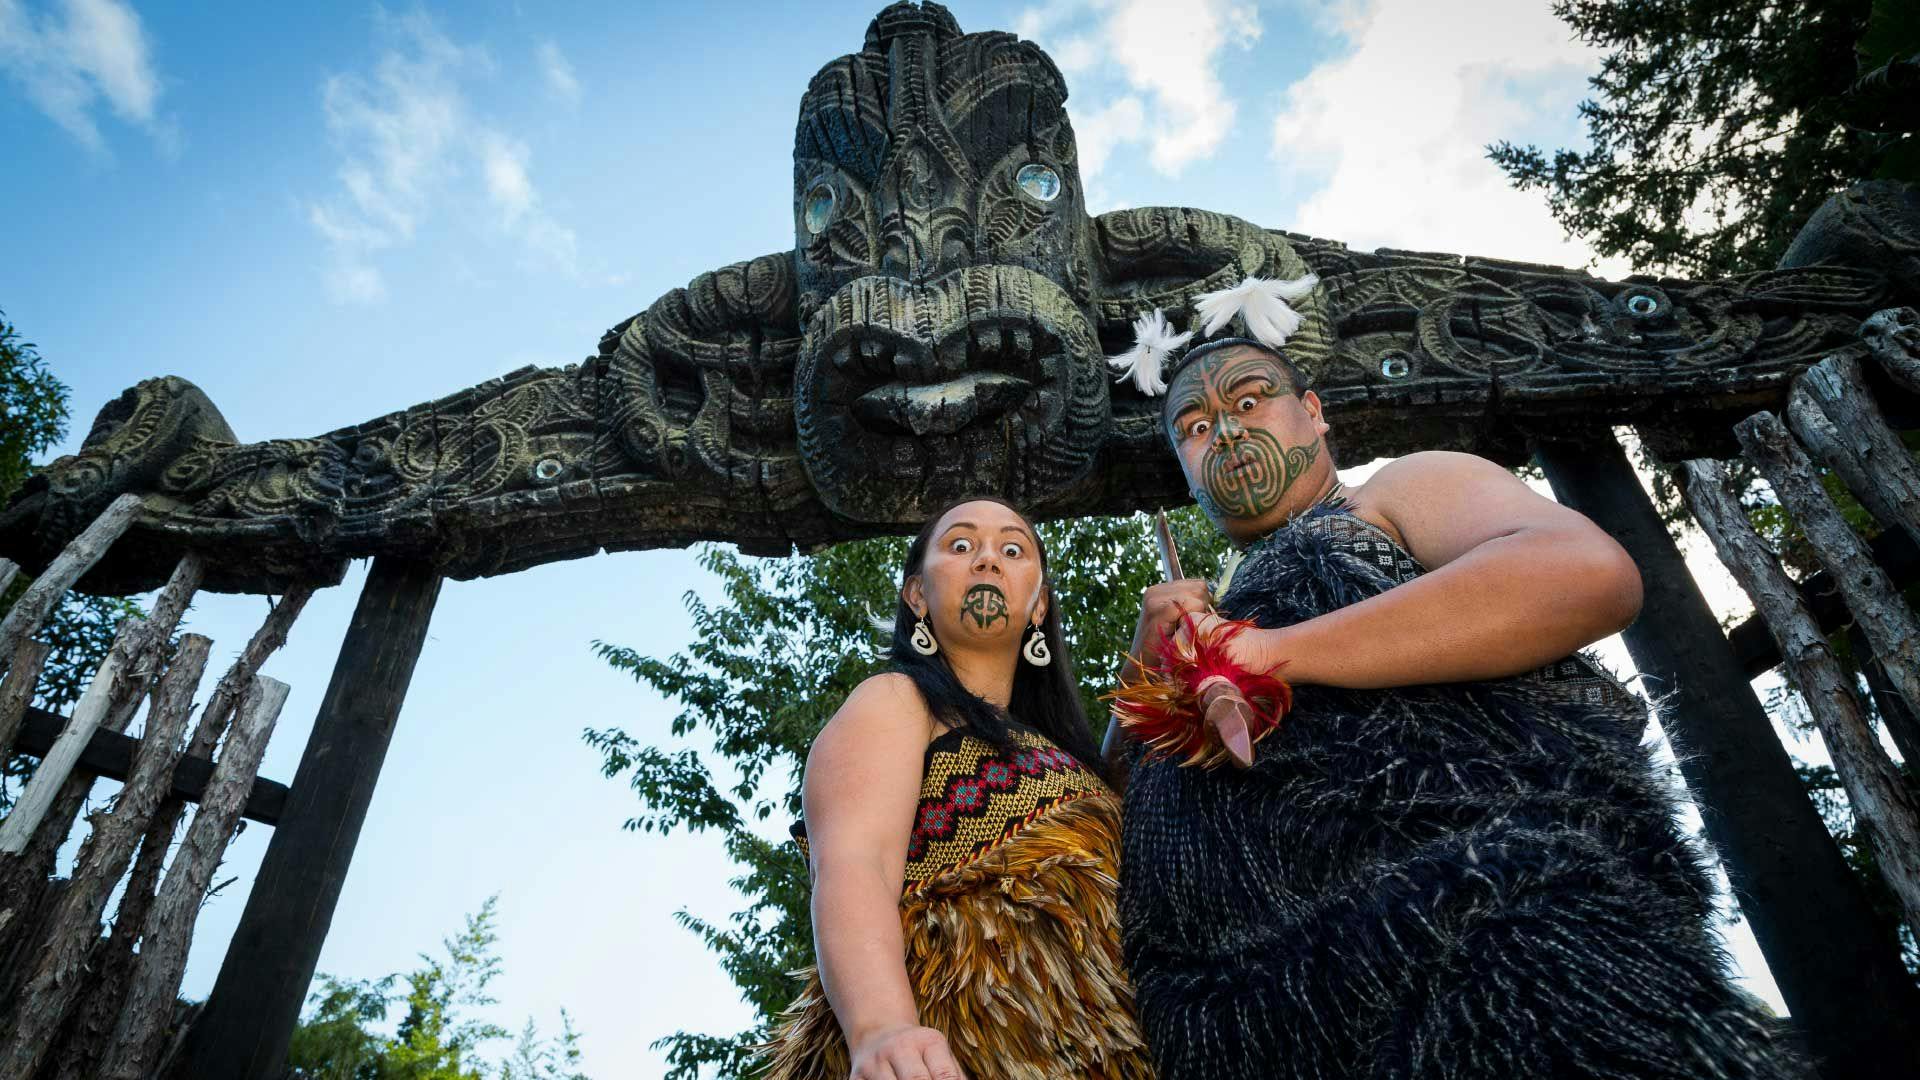 Māori man and woman greet visitors at Mitai Maori Village in Rotorua